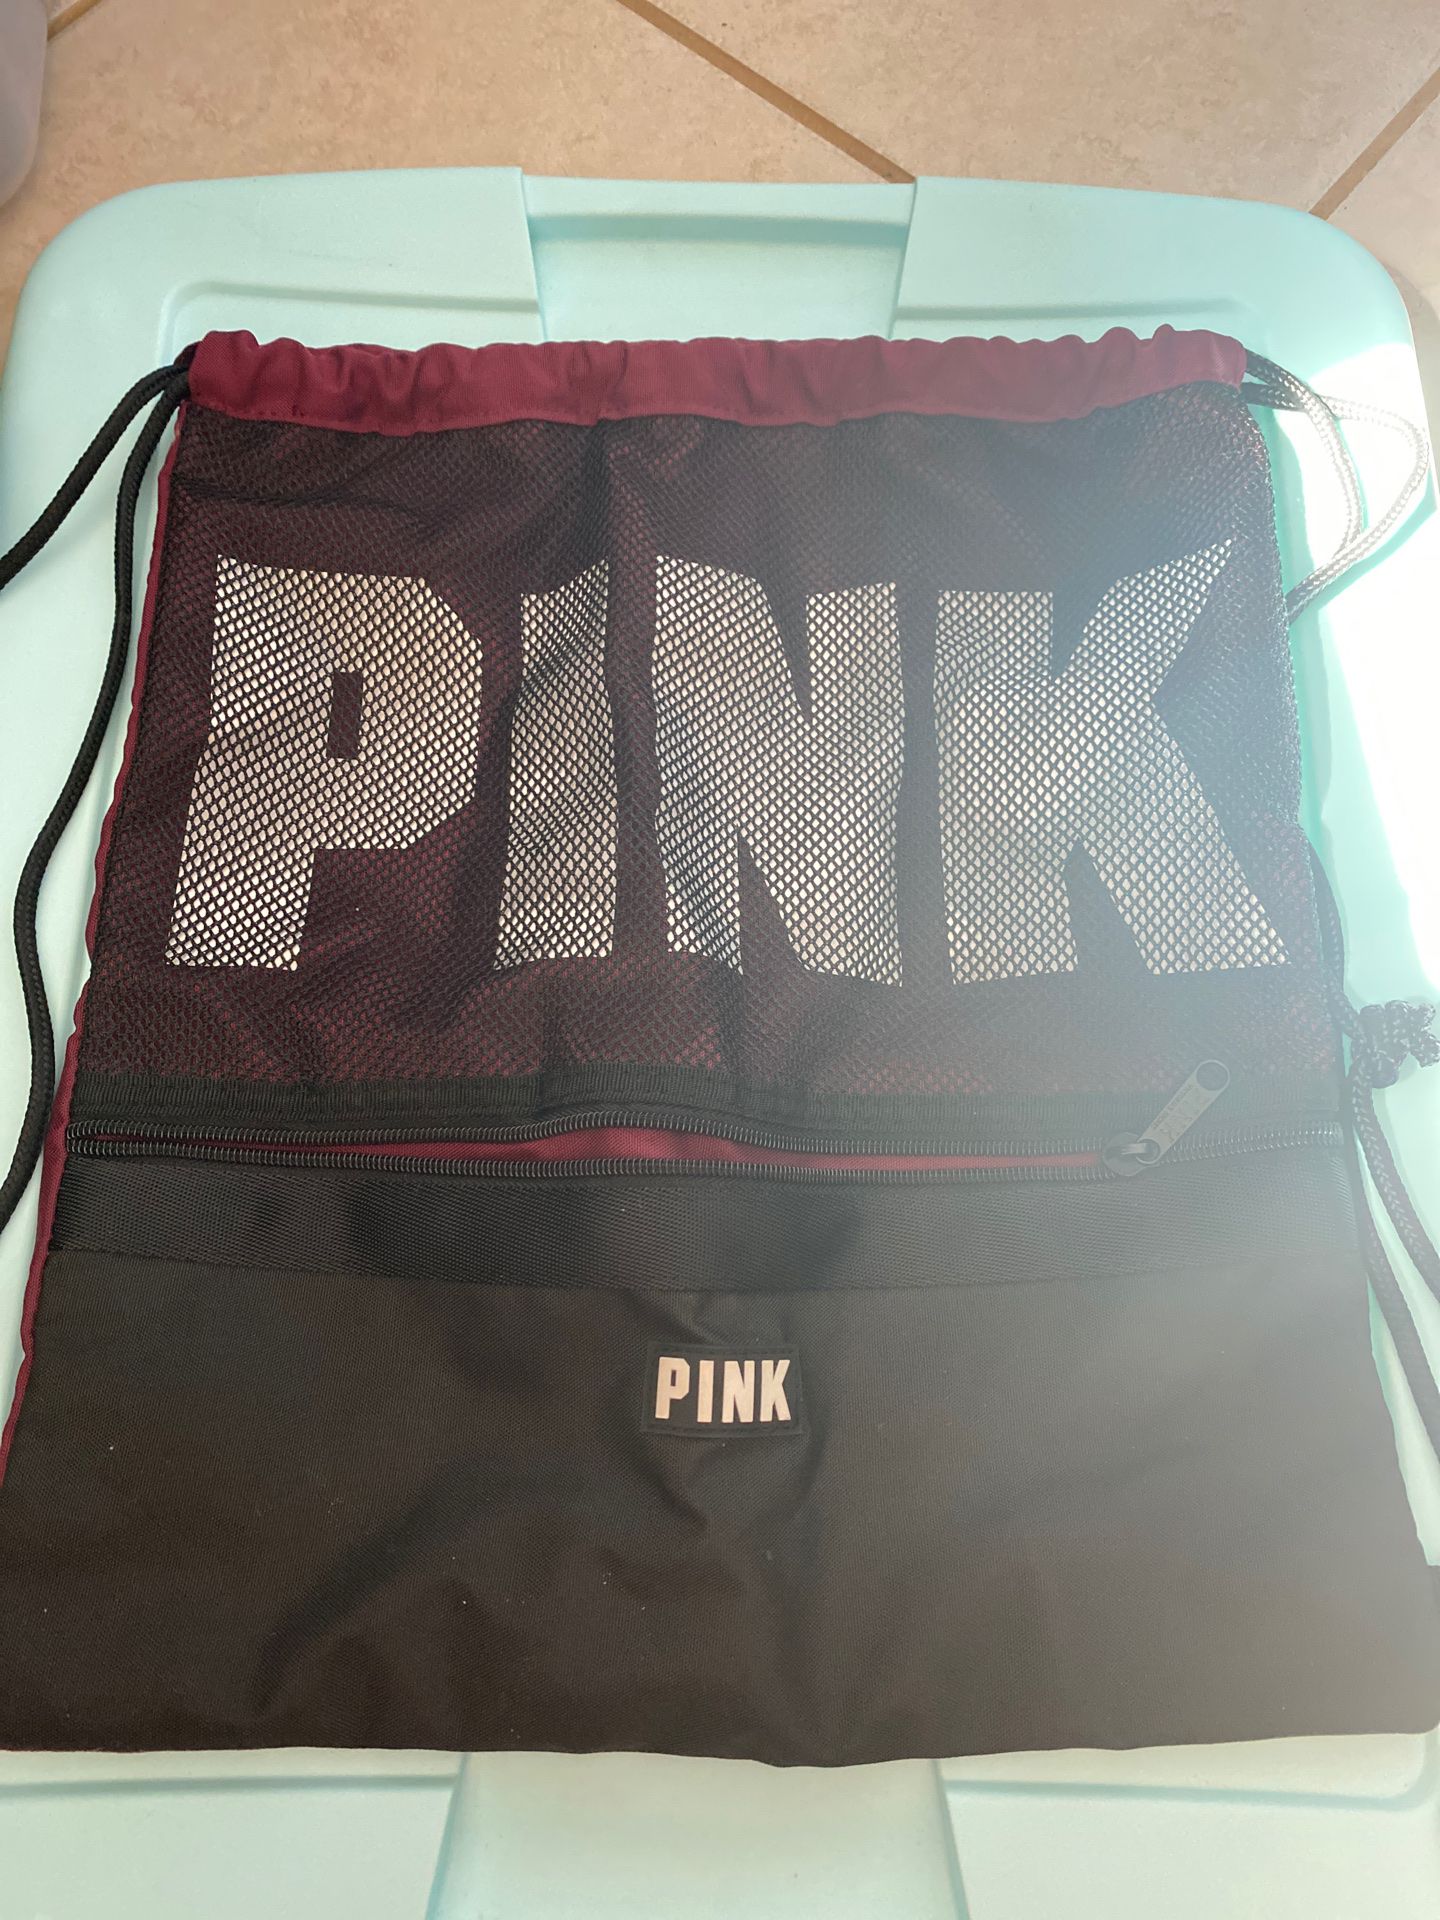 Pink drawstring backpack